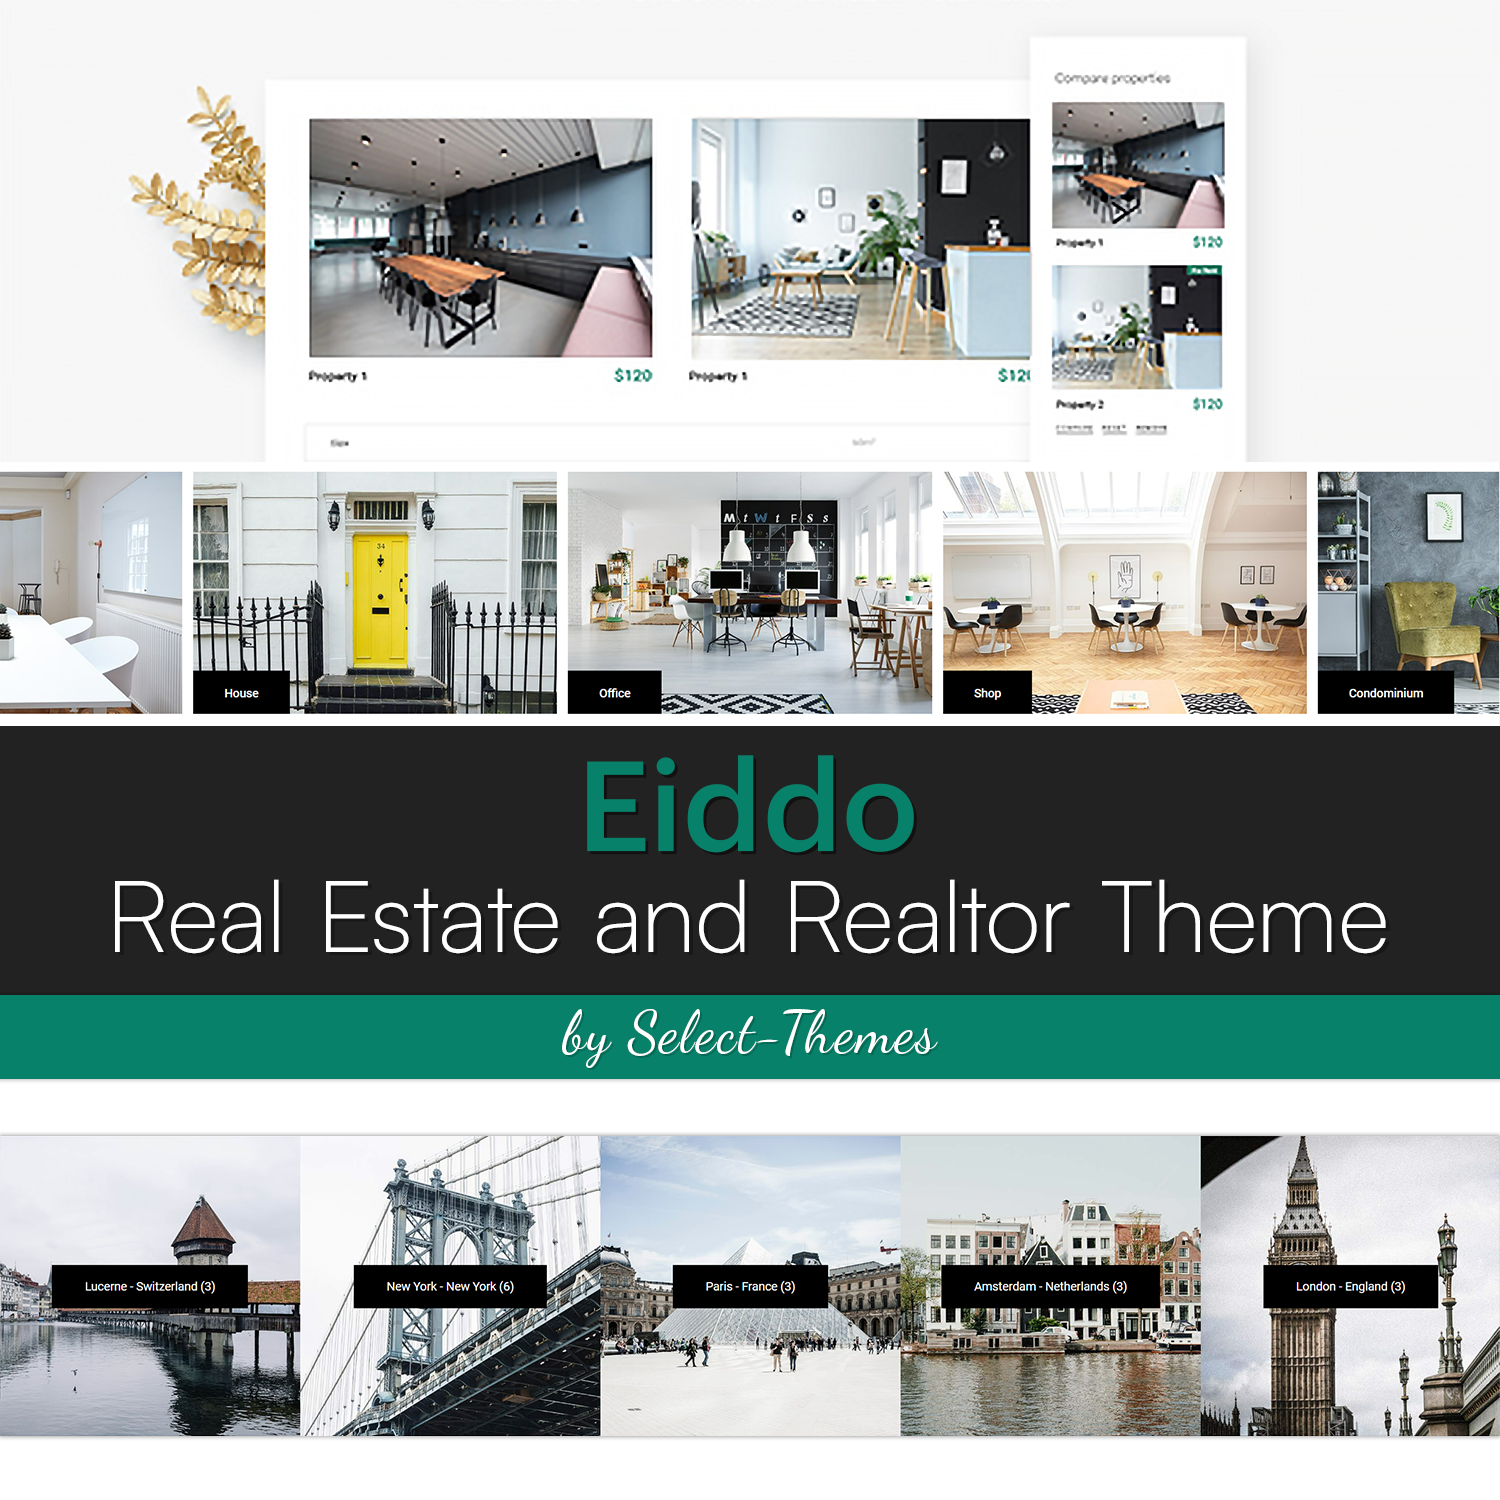 Preview eiddo real estate and realtor theme.